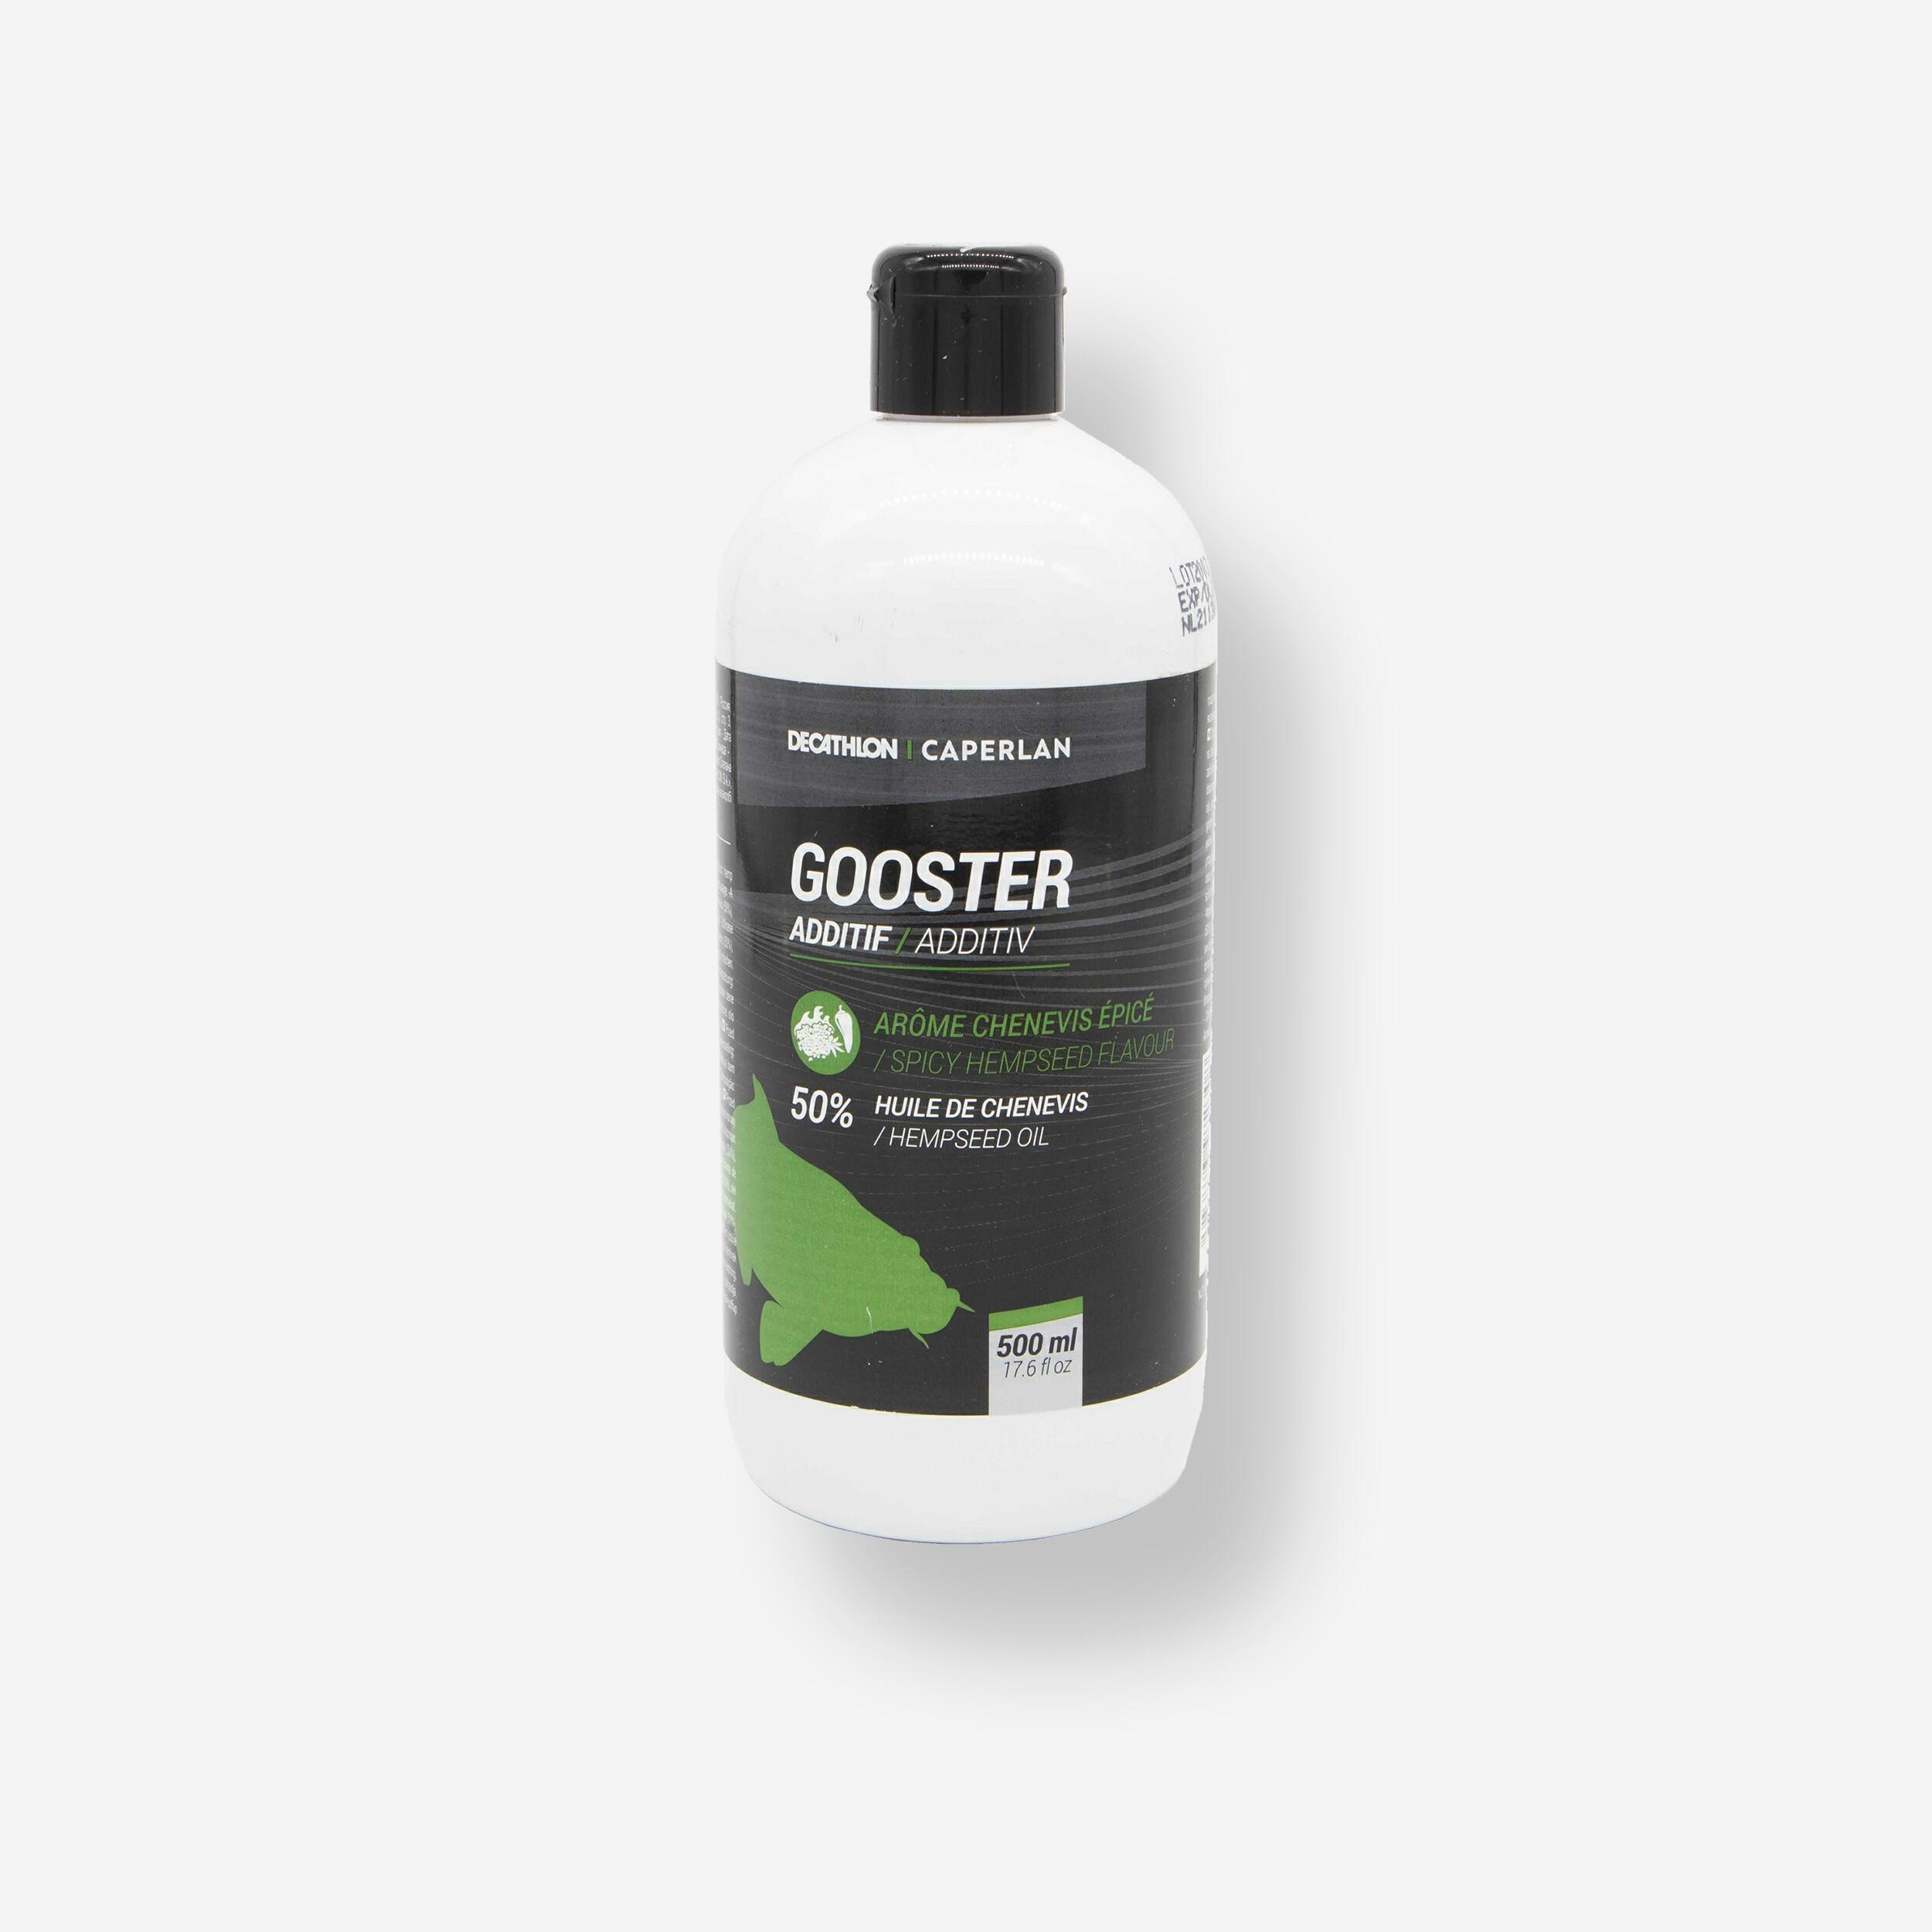 Gooster Additiv Still Fishing Liquid Additive Spicy Hemp 500ml CAPERLAN